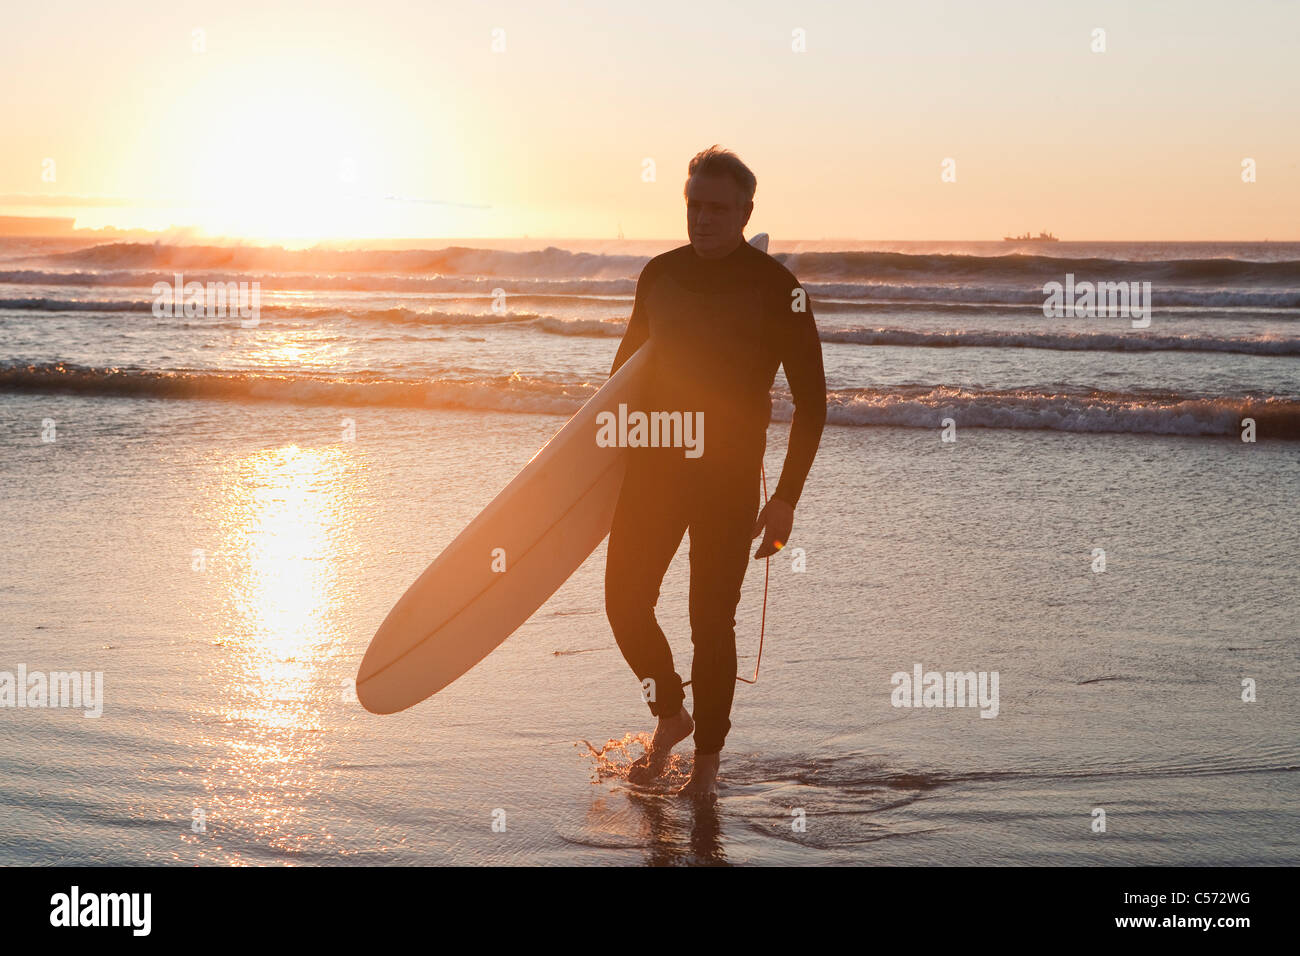 Surfer walking in water Stock Photo